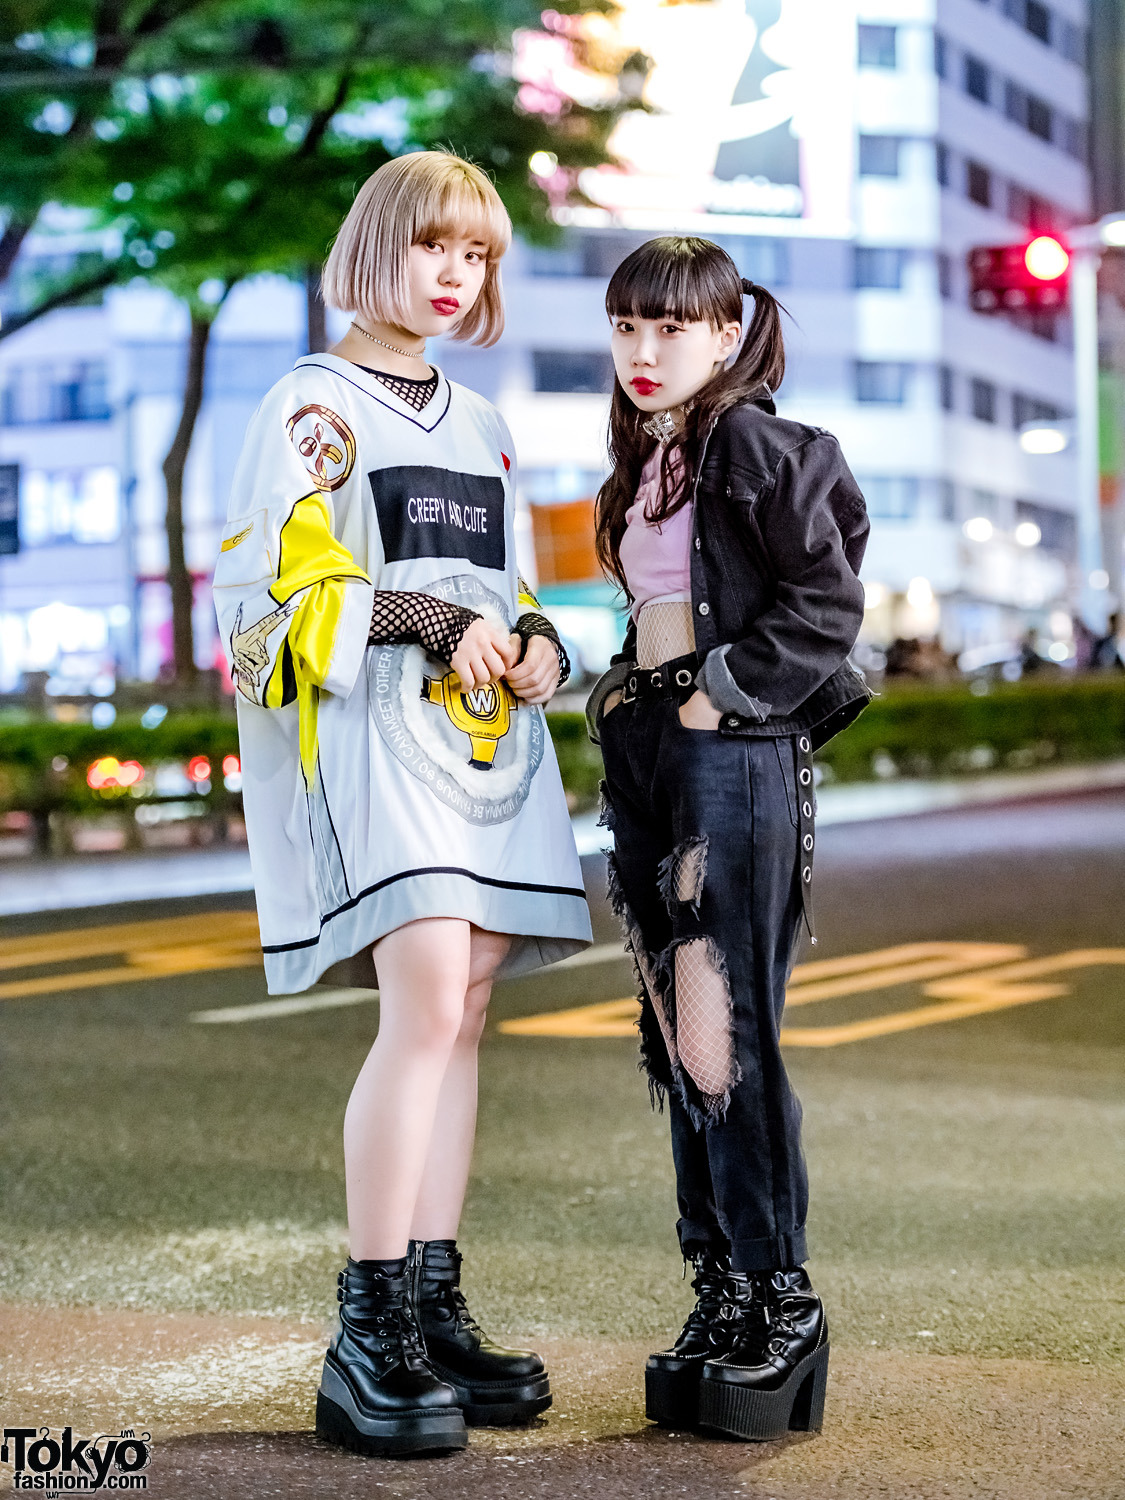 tokyo-fashion:  Japanese teens Sarah and Beni on the street in Harajuku wearing a